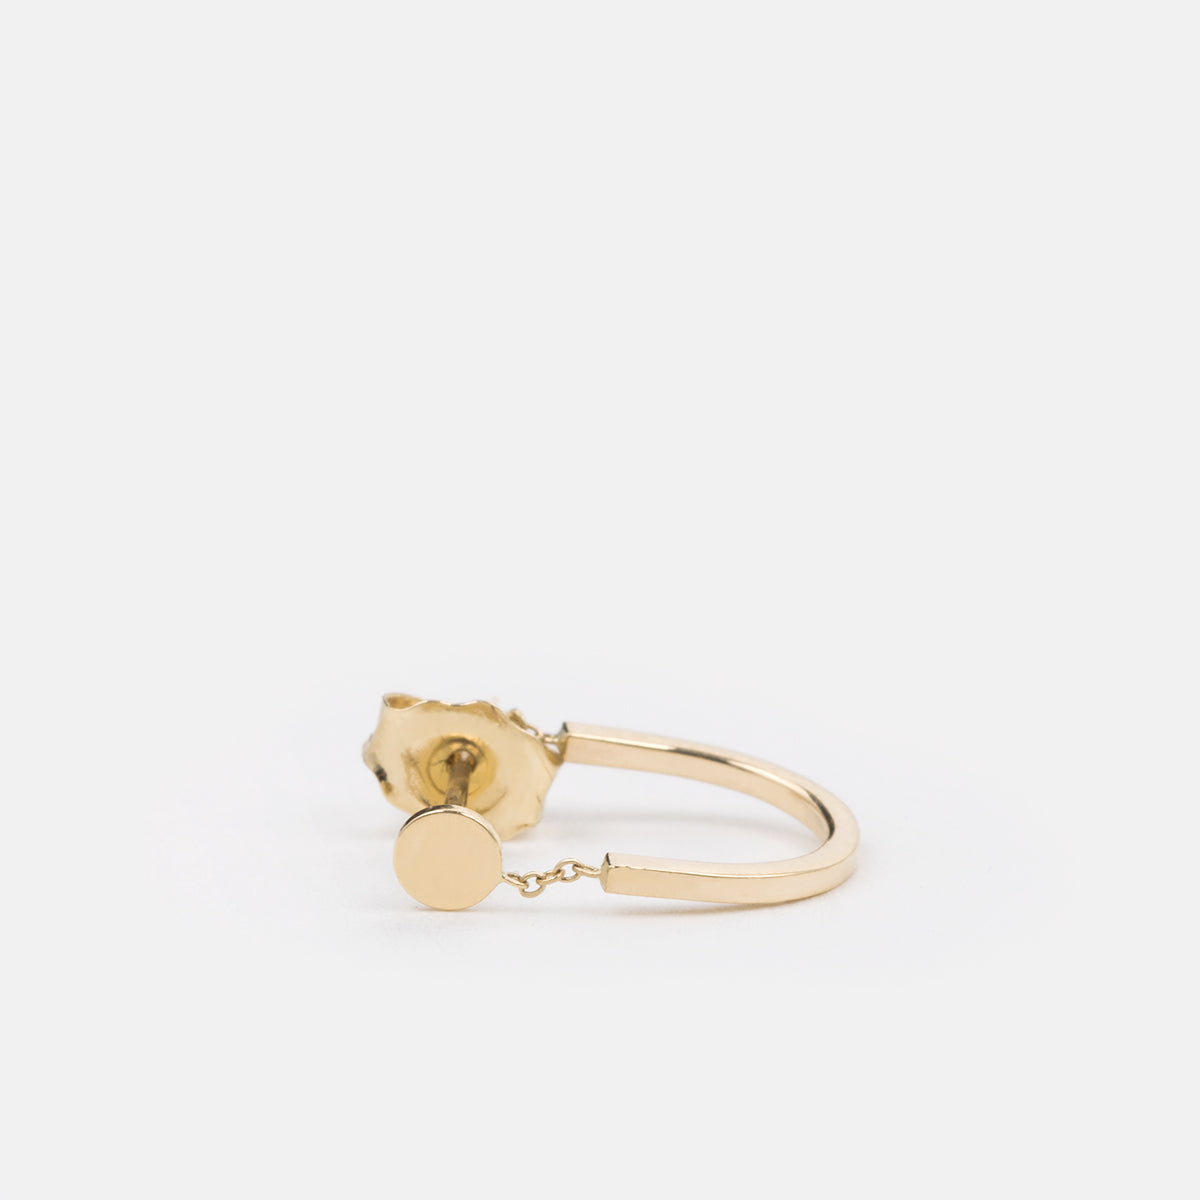 Mini Rita Designer Hug Earring in 14k Gold By SHW Fine Jewelry NYC